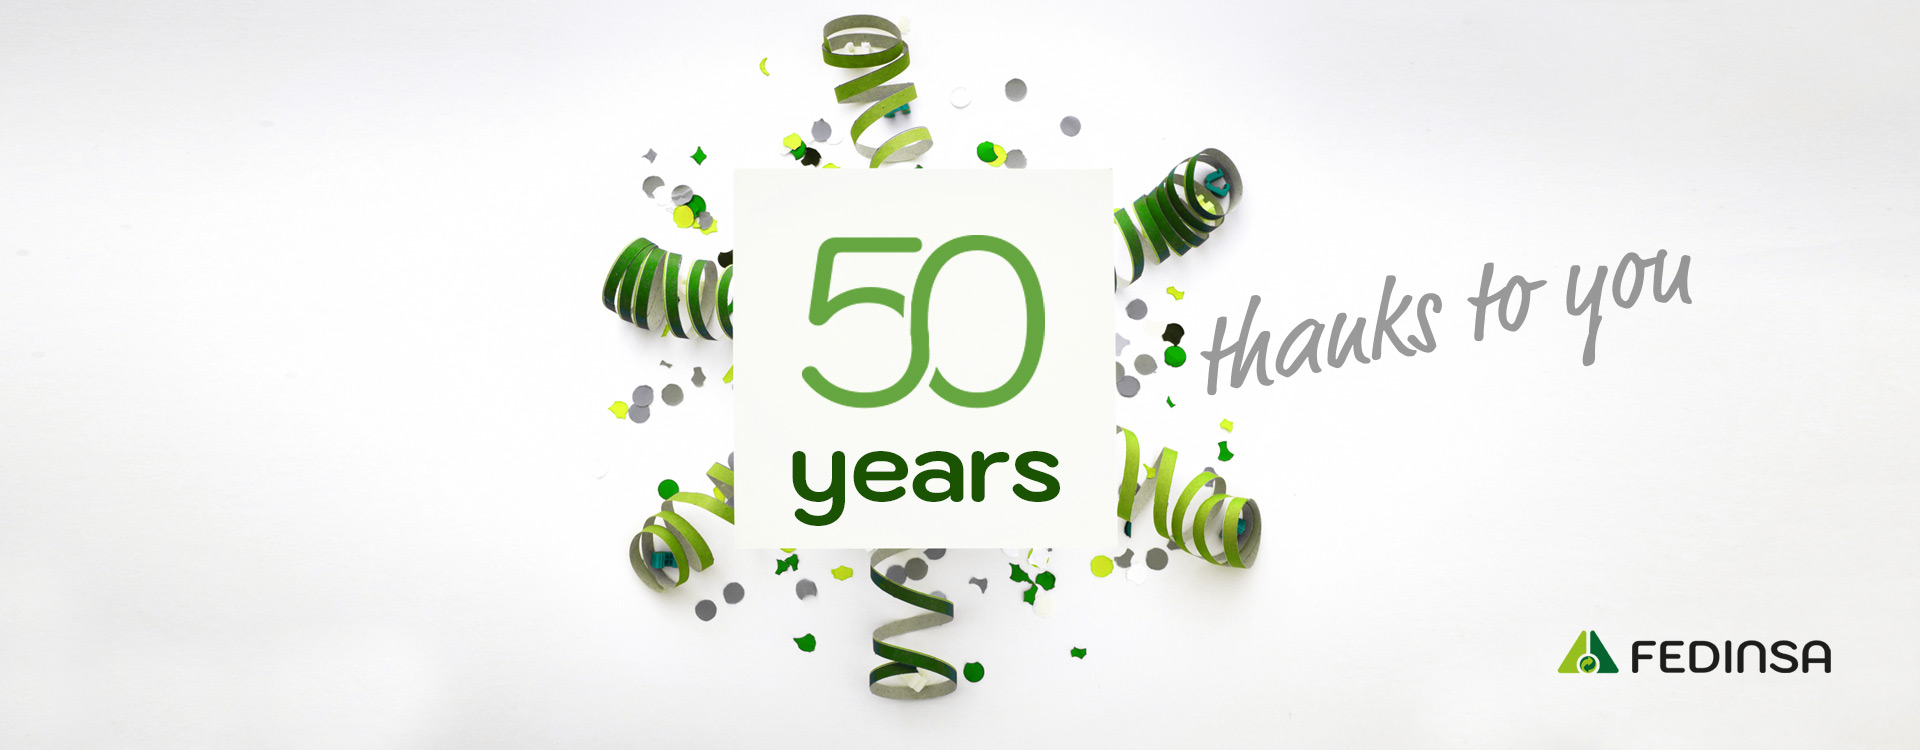 Fedinsa - 50 years thanks to you.